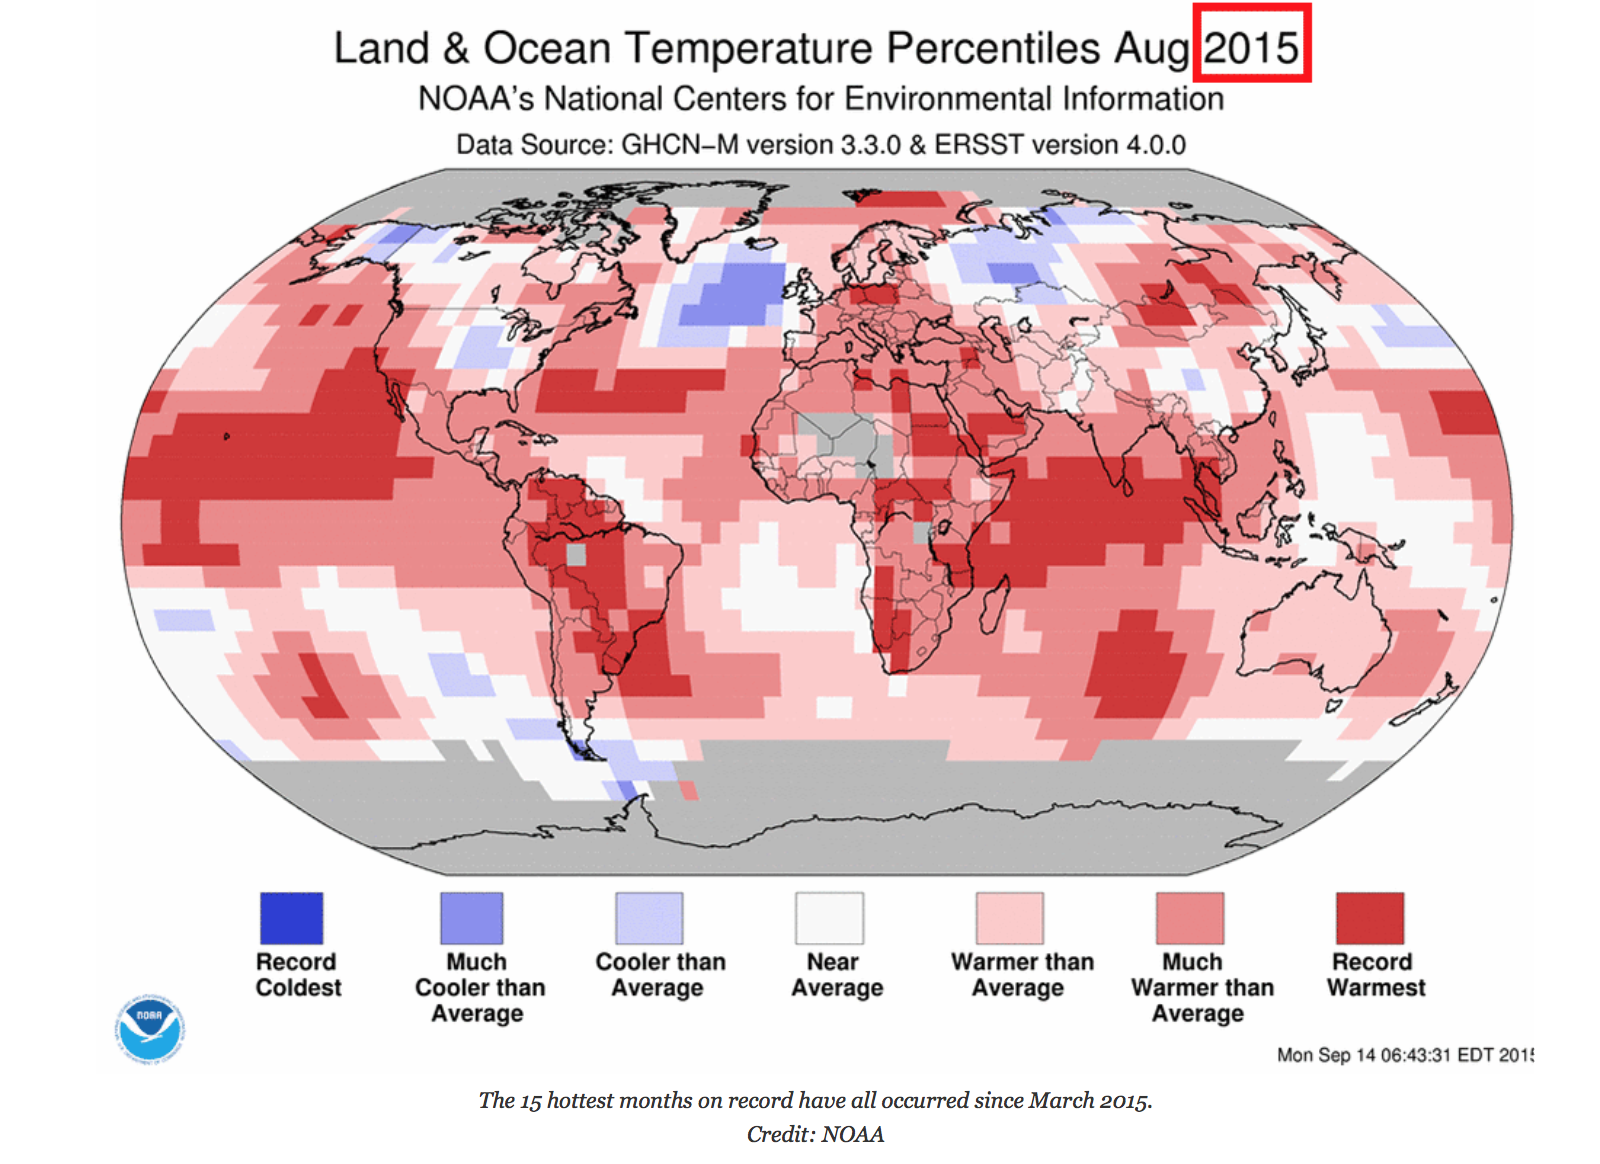 Land and Ocean Temperature Percentiles August 2015 graph.